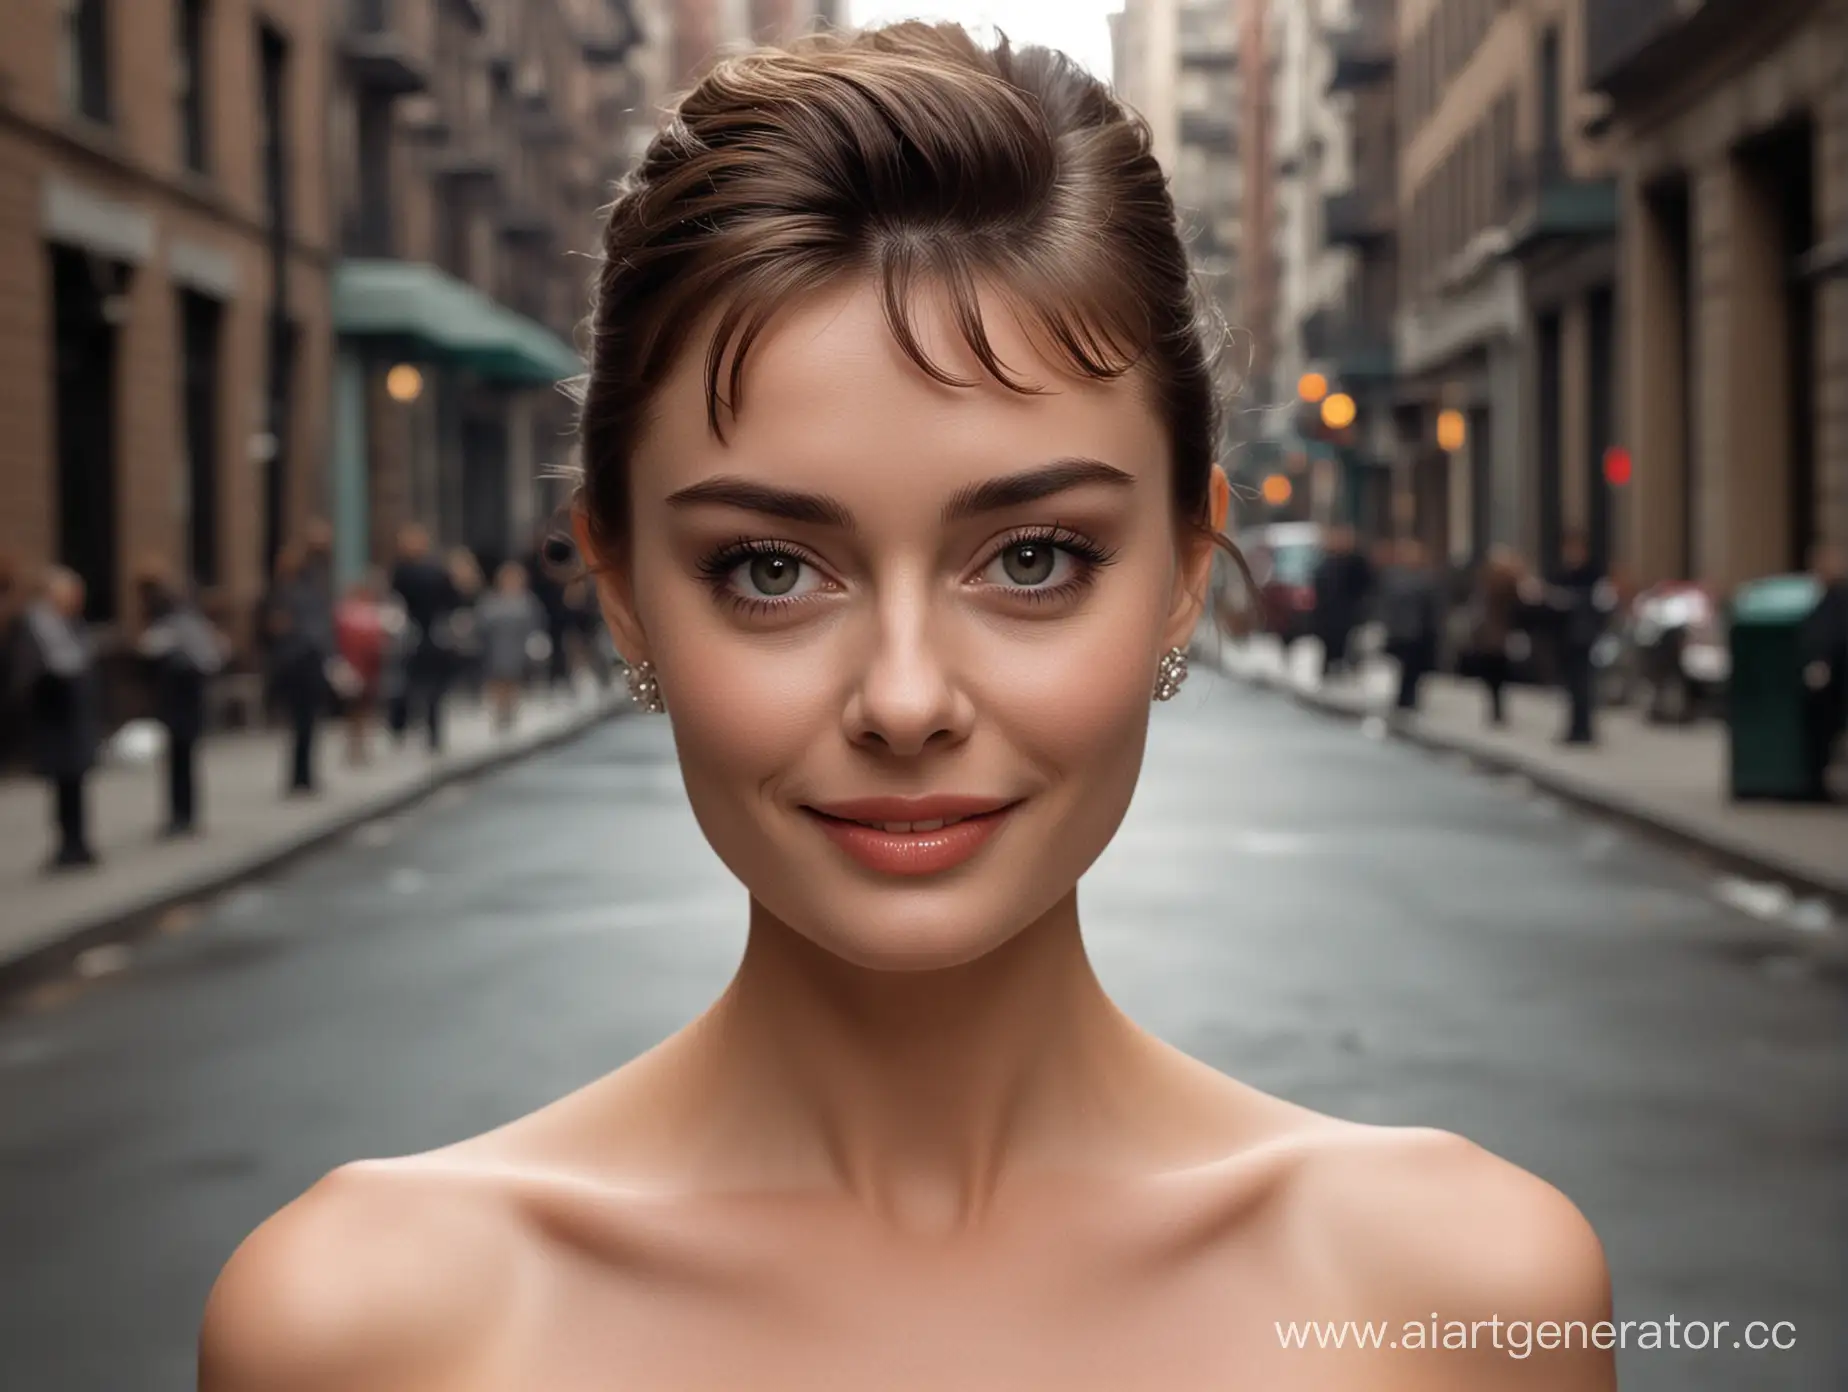 Supernatural-Audrey-Hepburn-Enigmatic-Beauty-in-New-York-Streets